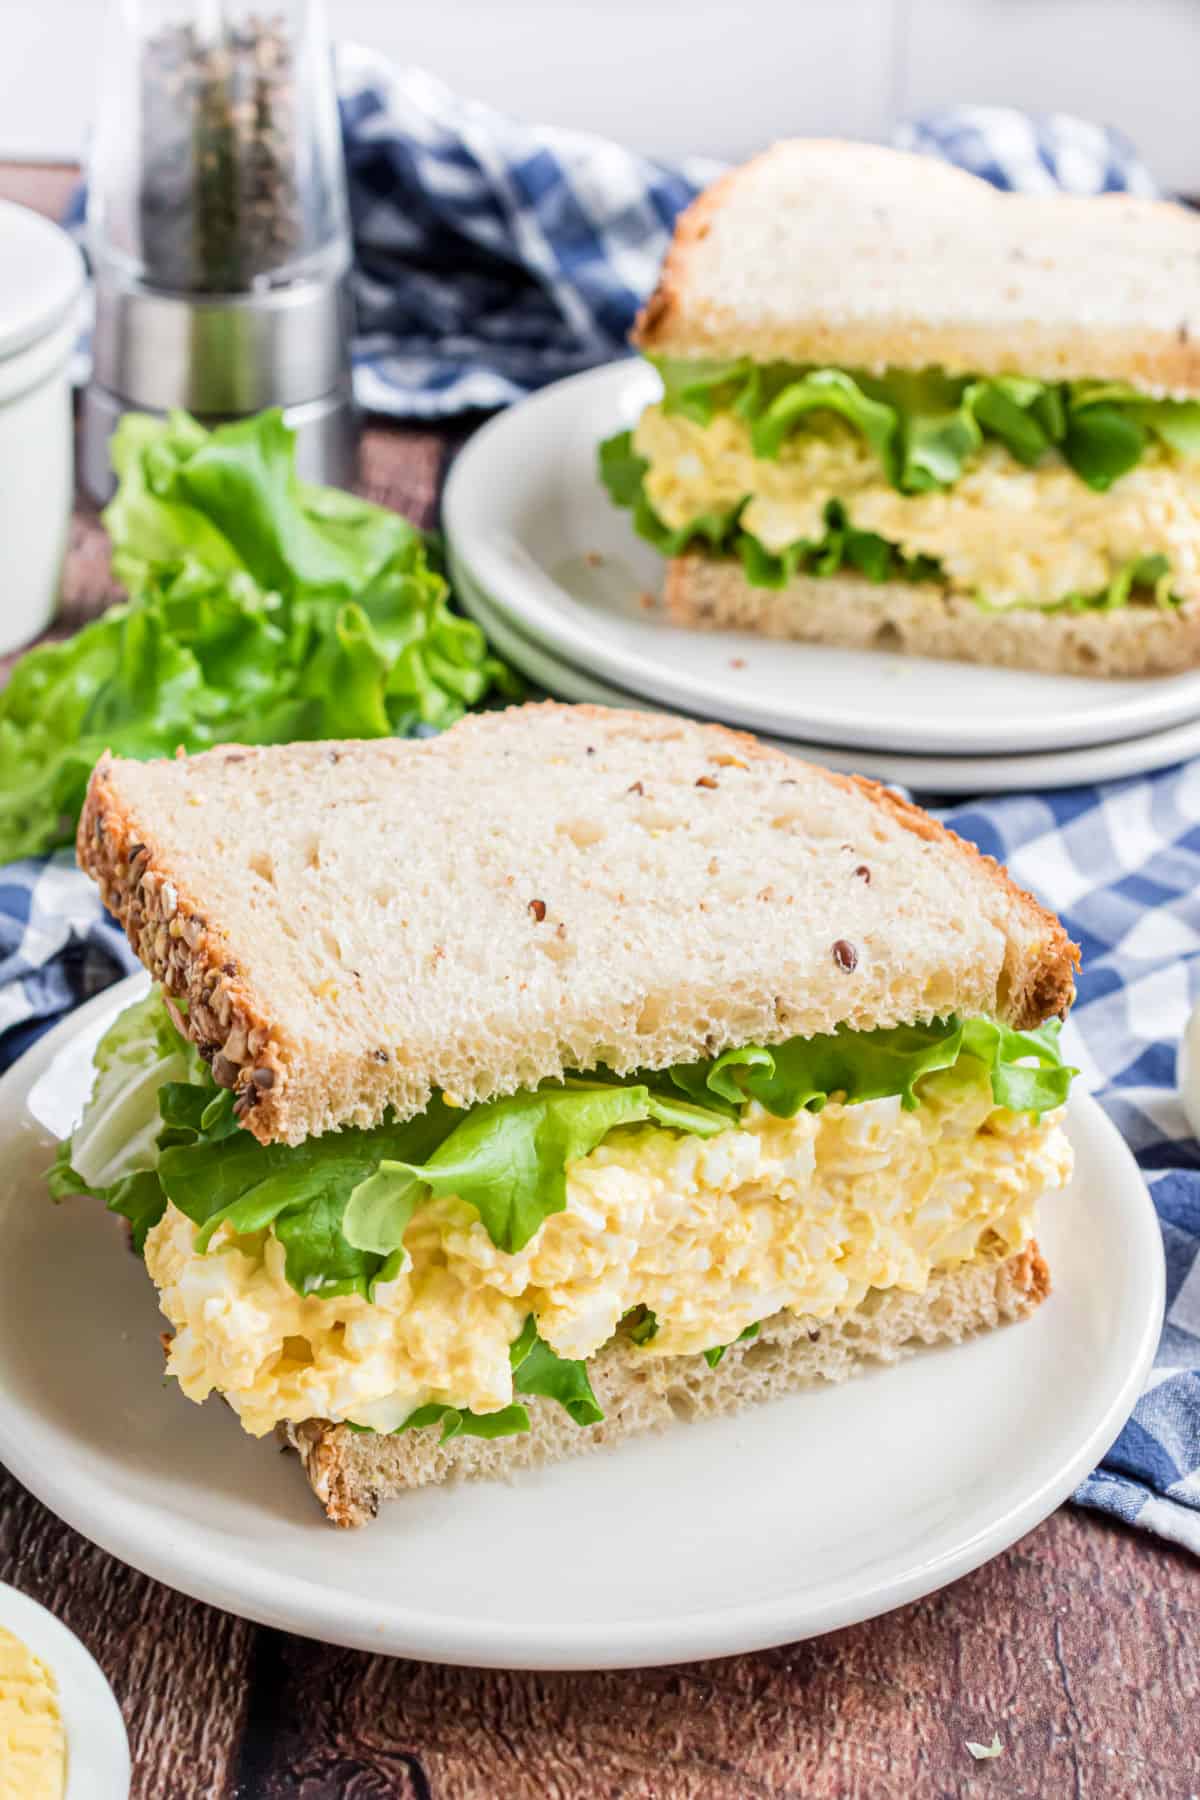 https://www.shugarysweets.com/wp-content/uploads/2019/04/egg-salad-sandwich.jpg